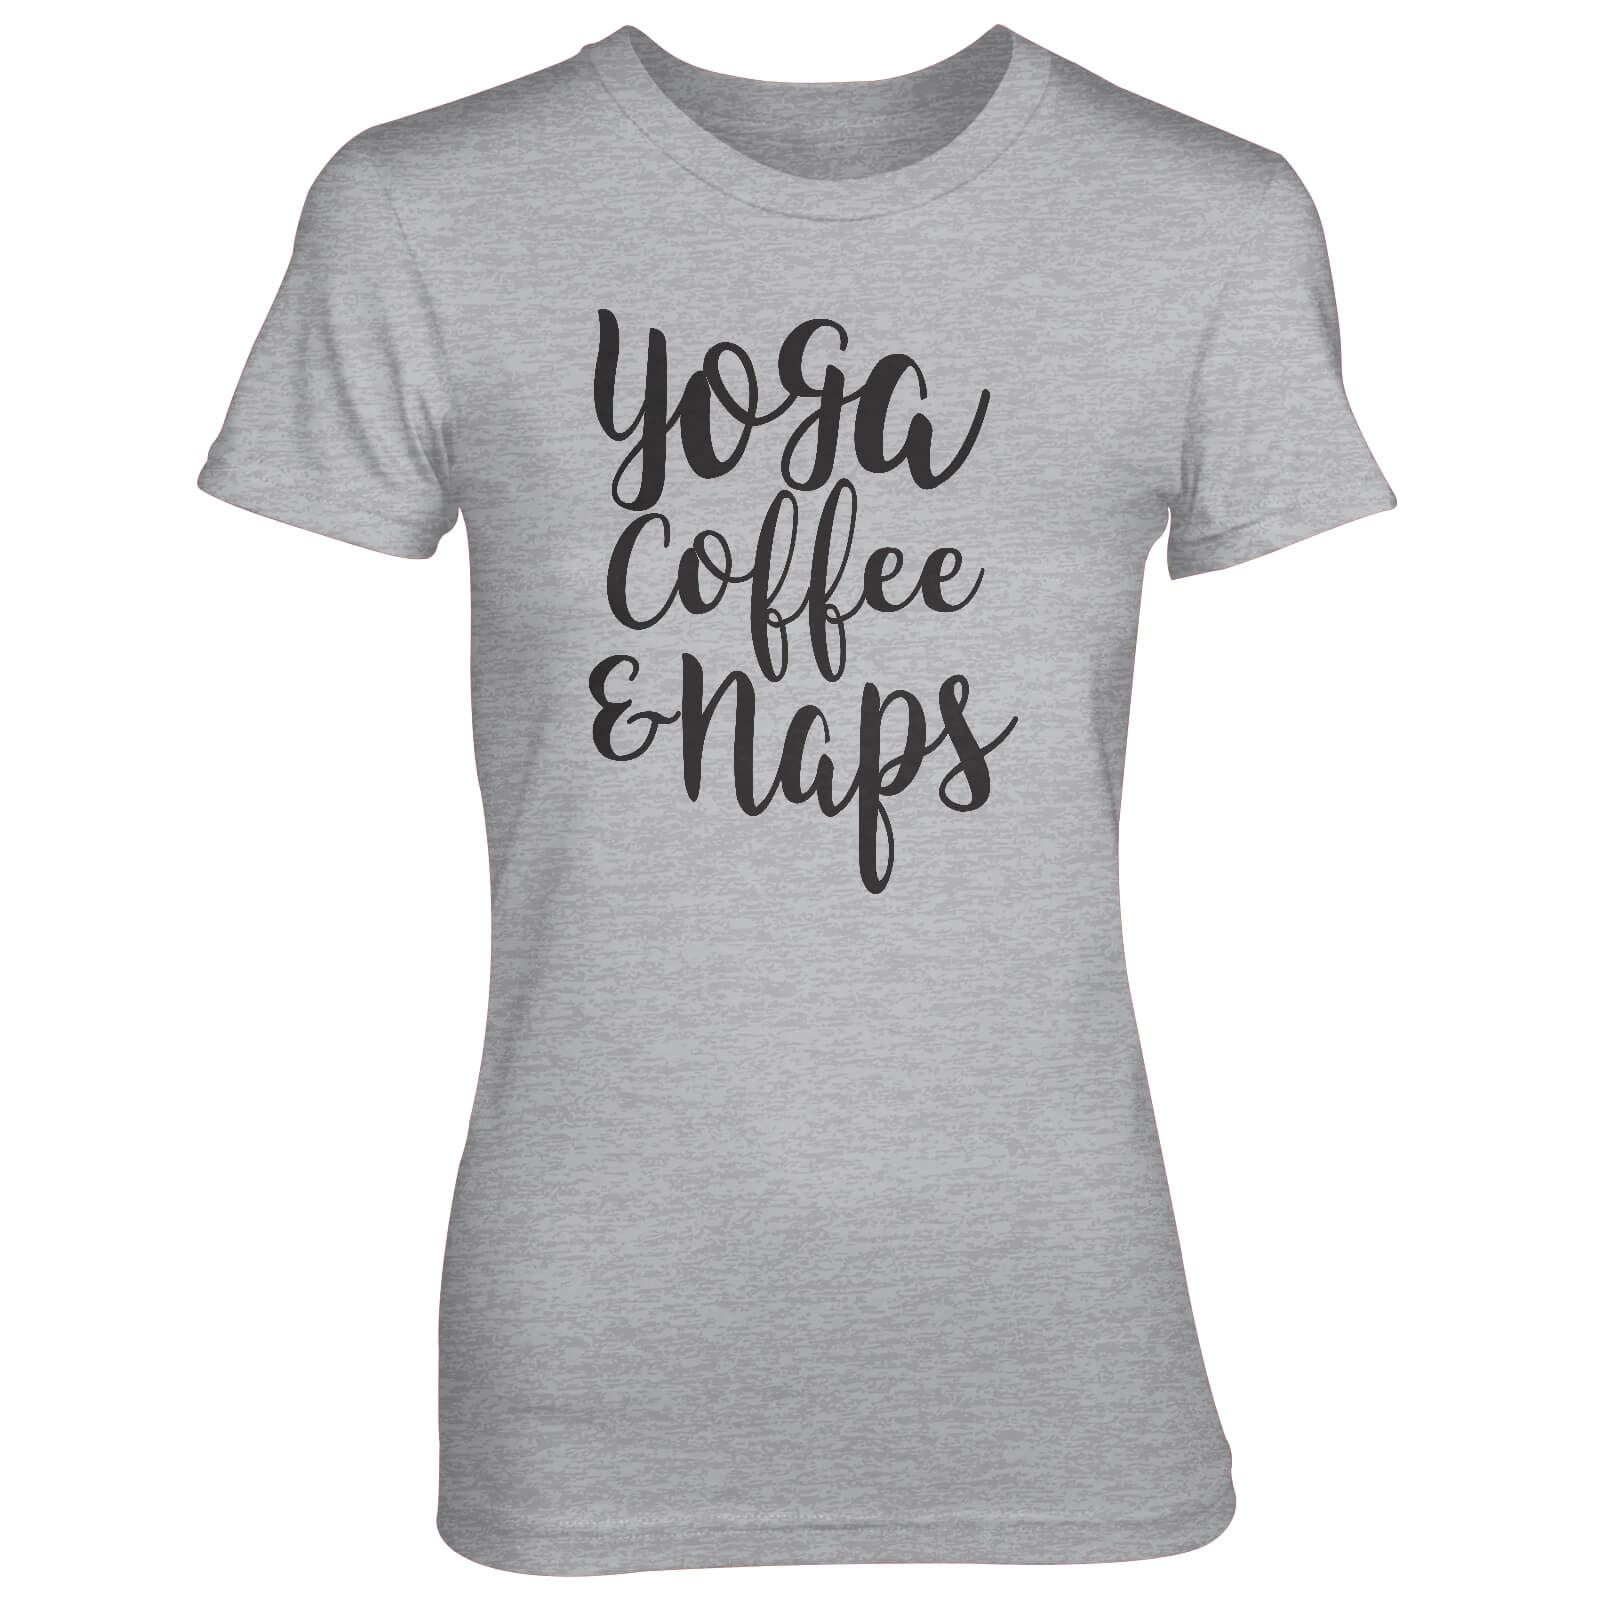 Yoga Coffee And Naps Women's Grey T-Shirt - S - Grey